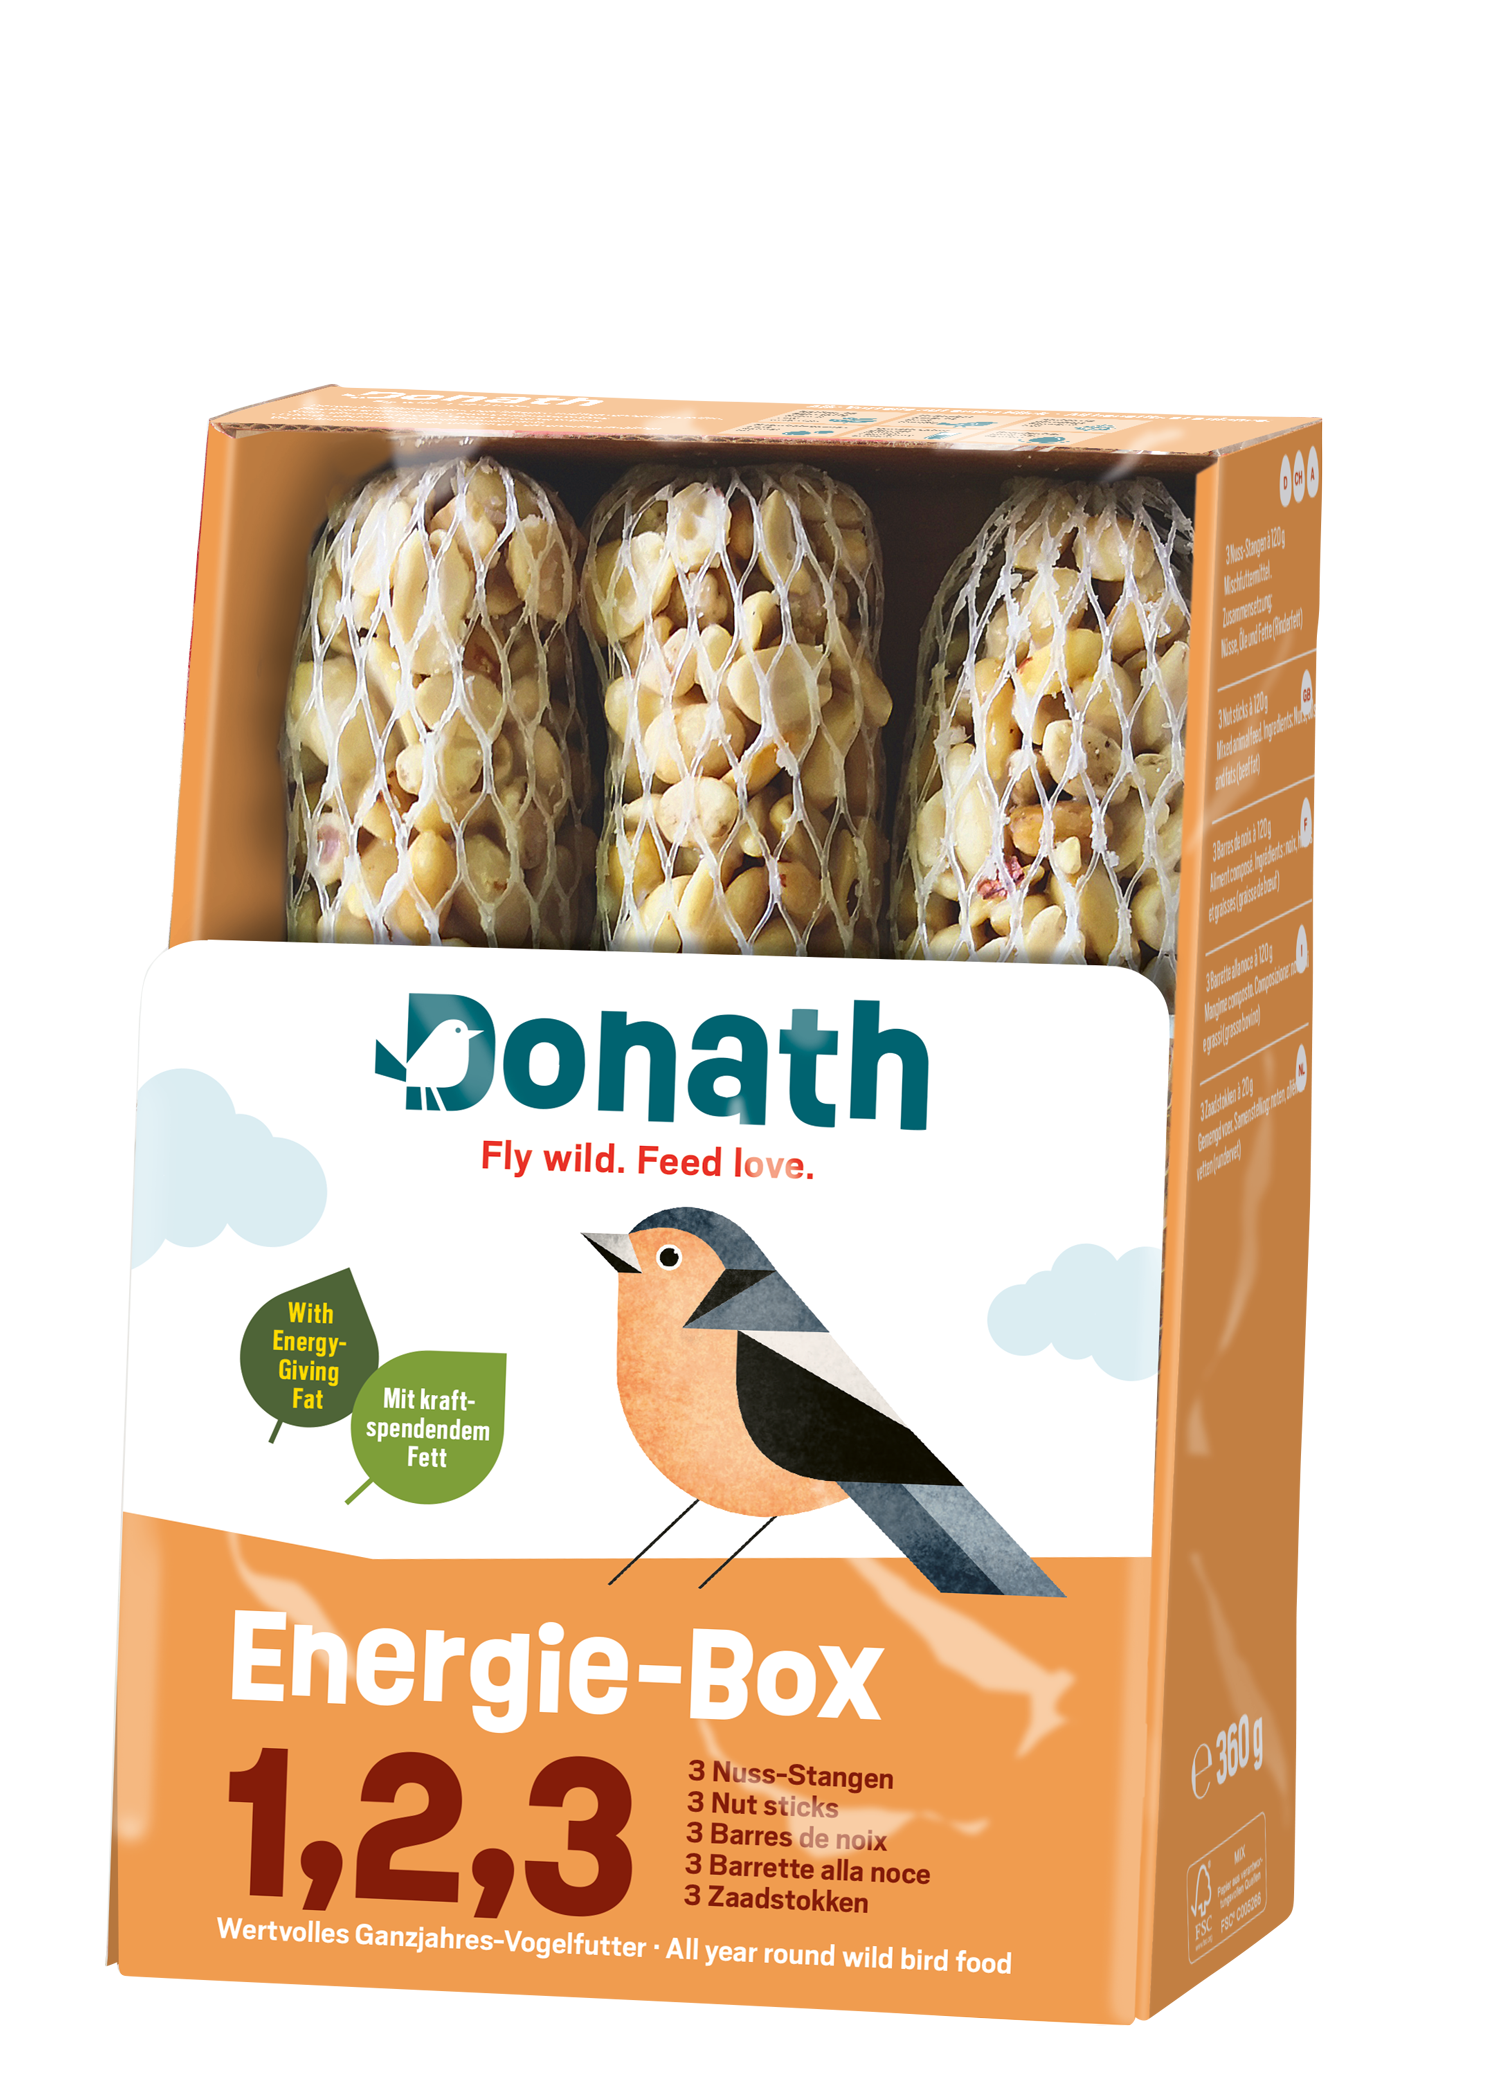 Donath Energie Box 1,2,3 360g